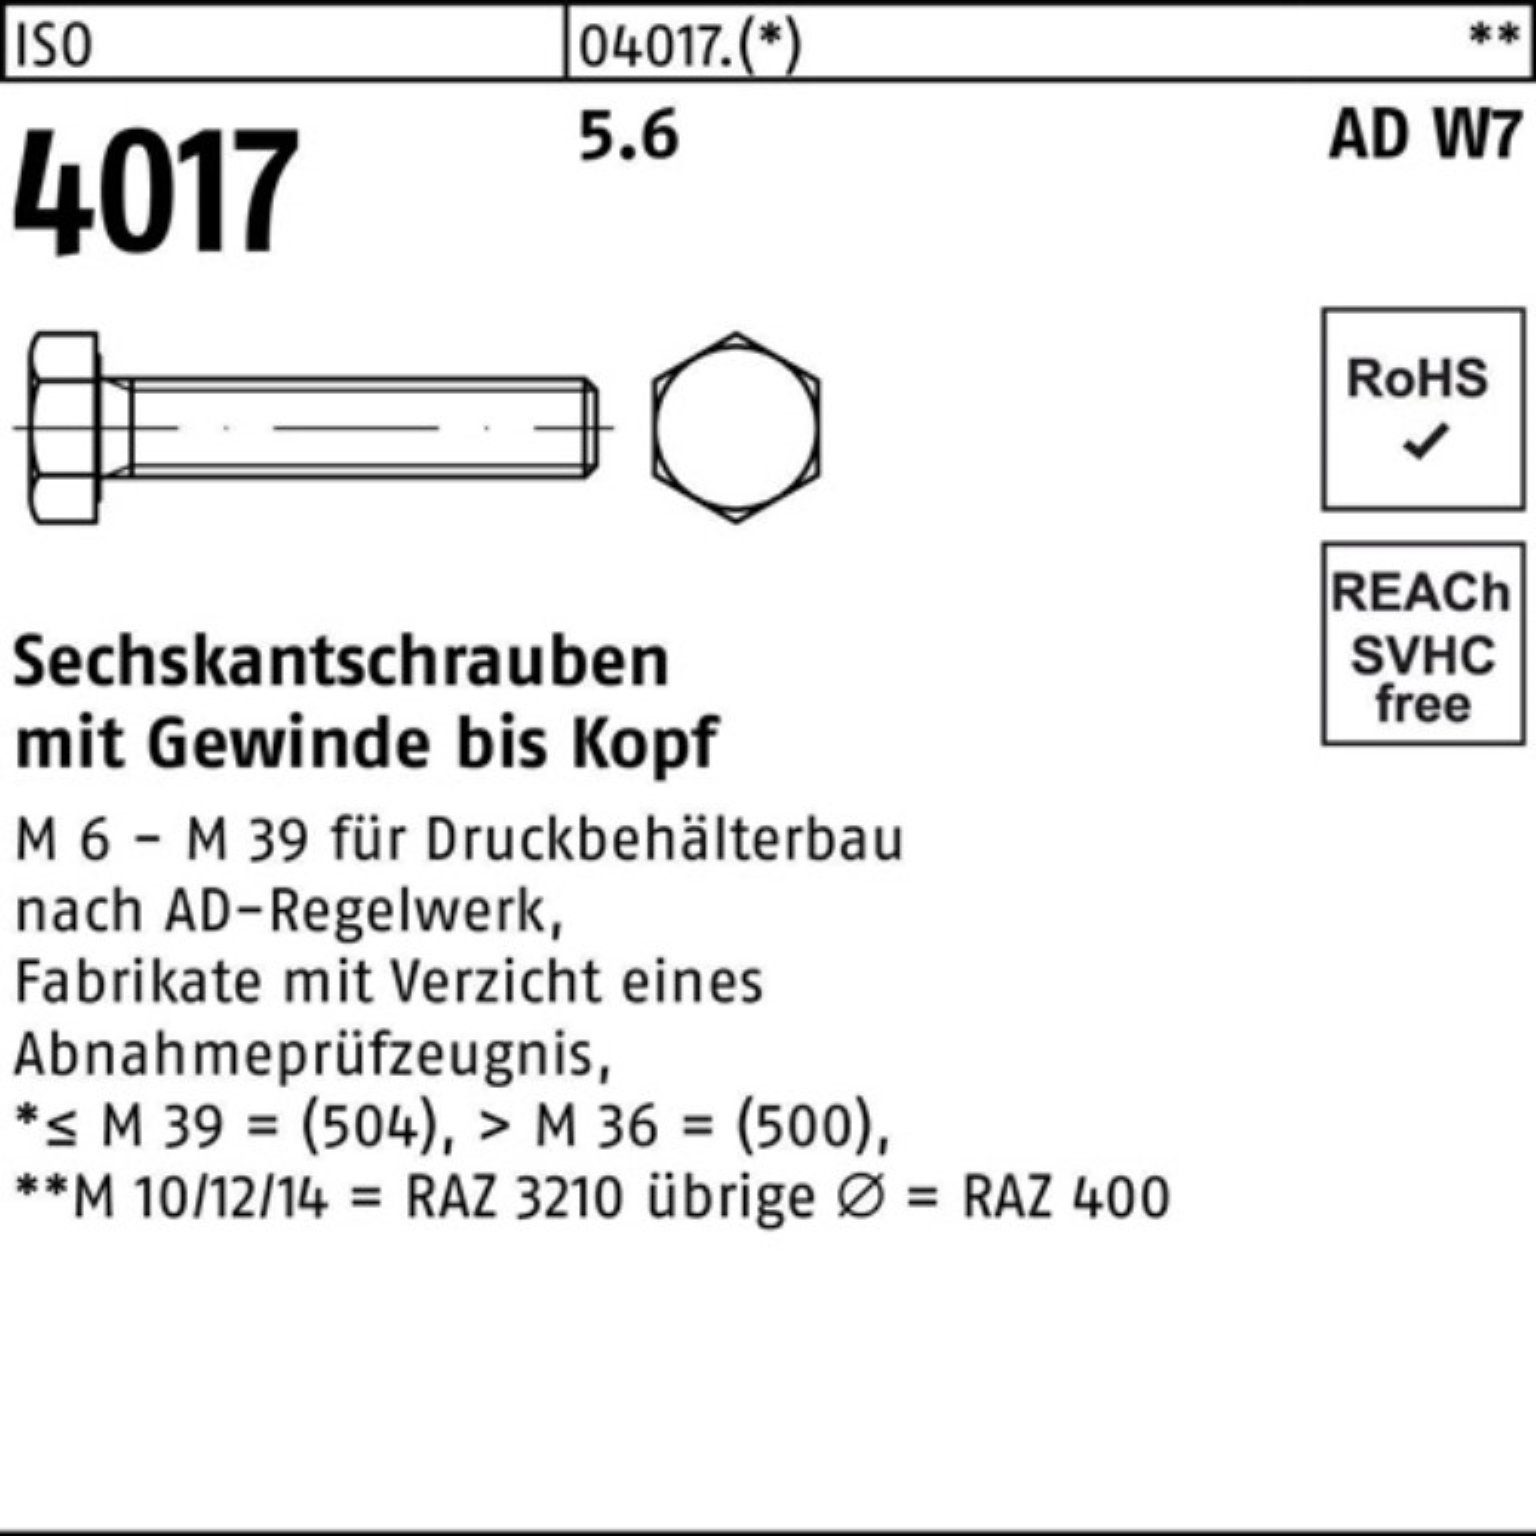 Bufab Sechskantschraube 100er Pack Sechskantschraube ISO 4017 VG M24x 40 5.6 AD W7 25 Stück I